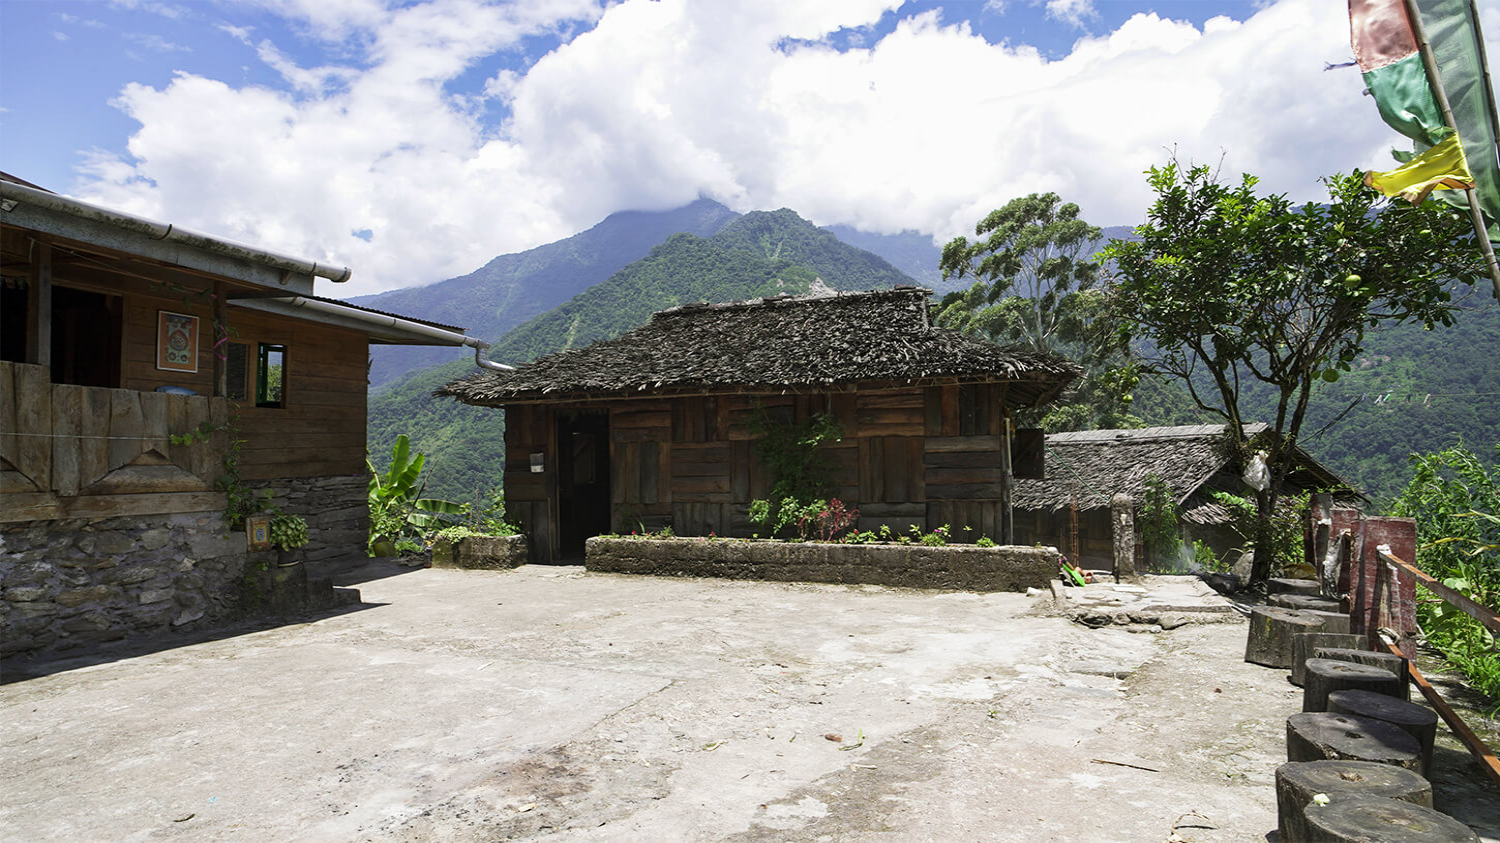 Lingthem Lyang, Dzongu, Sikkim, India